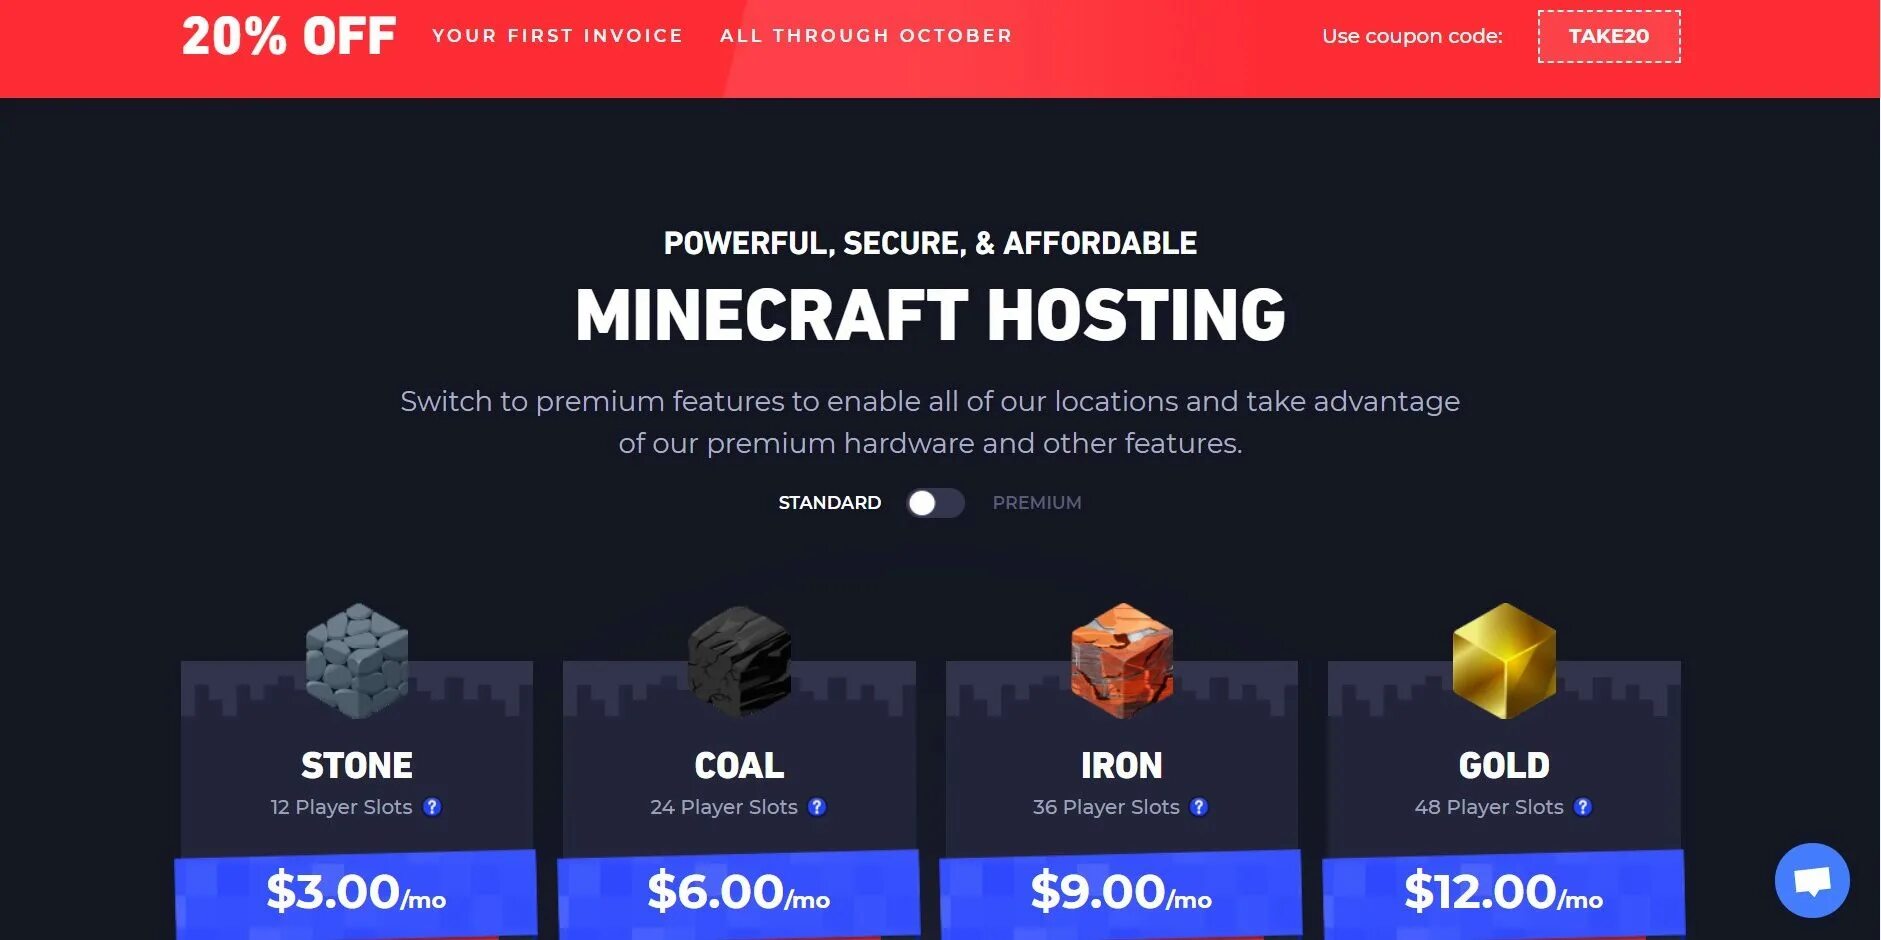 Minecraft хостинг топ. Хостинг майнкрафт. Хостинг серверов Minecraft. Дешевый хостинг майнкрафт сервера. Самый дешевый хостинг майнкрафт.